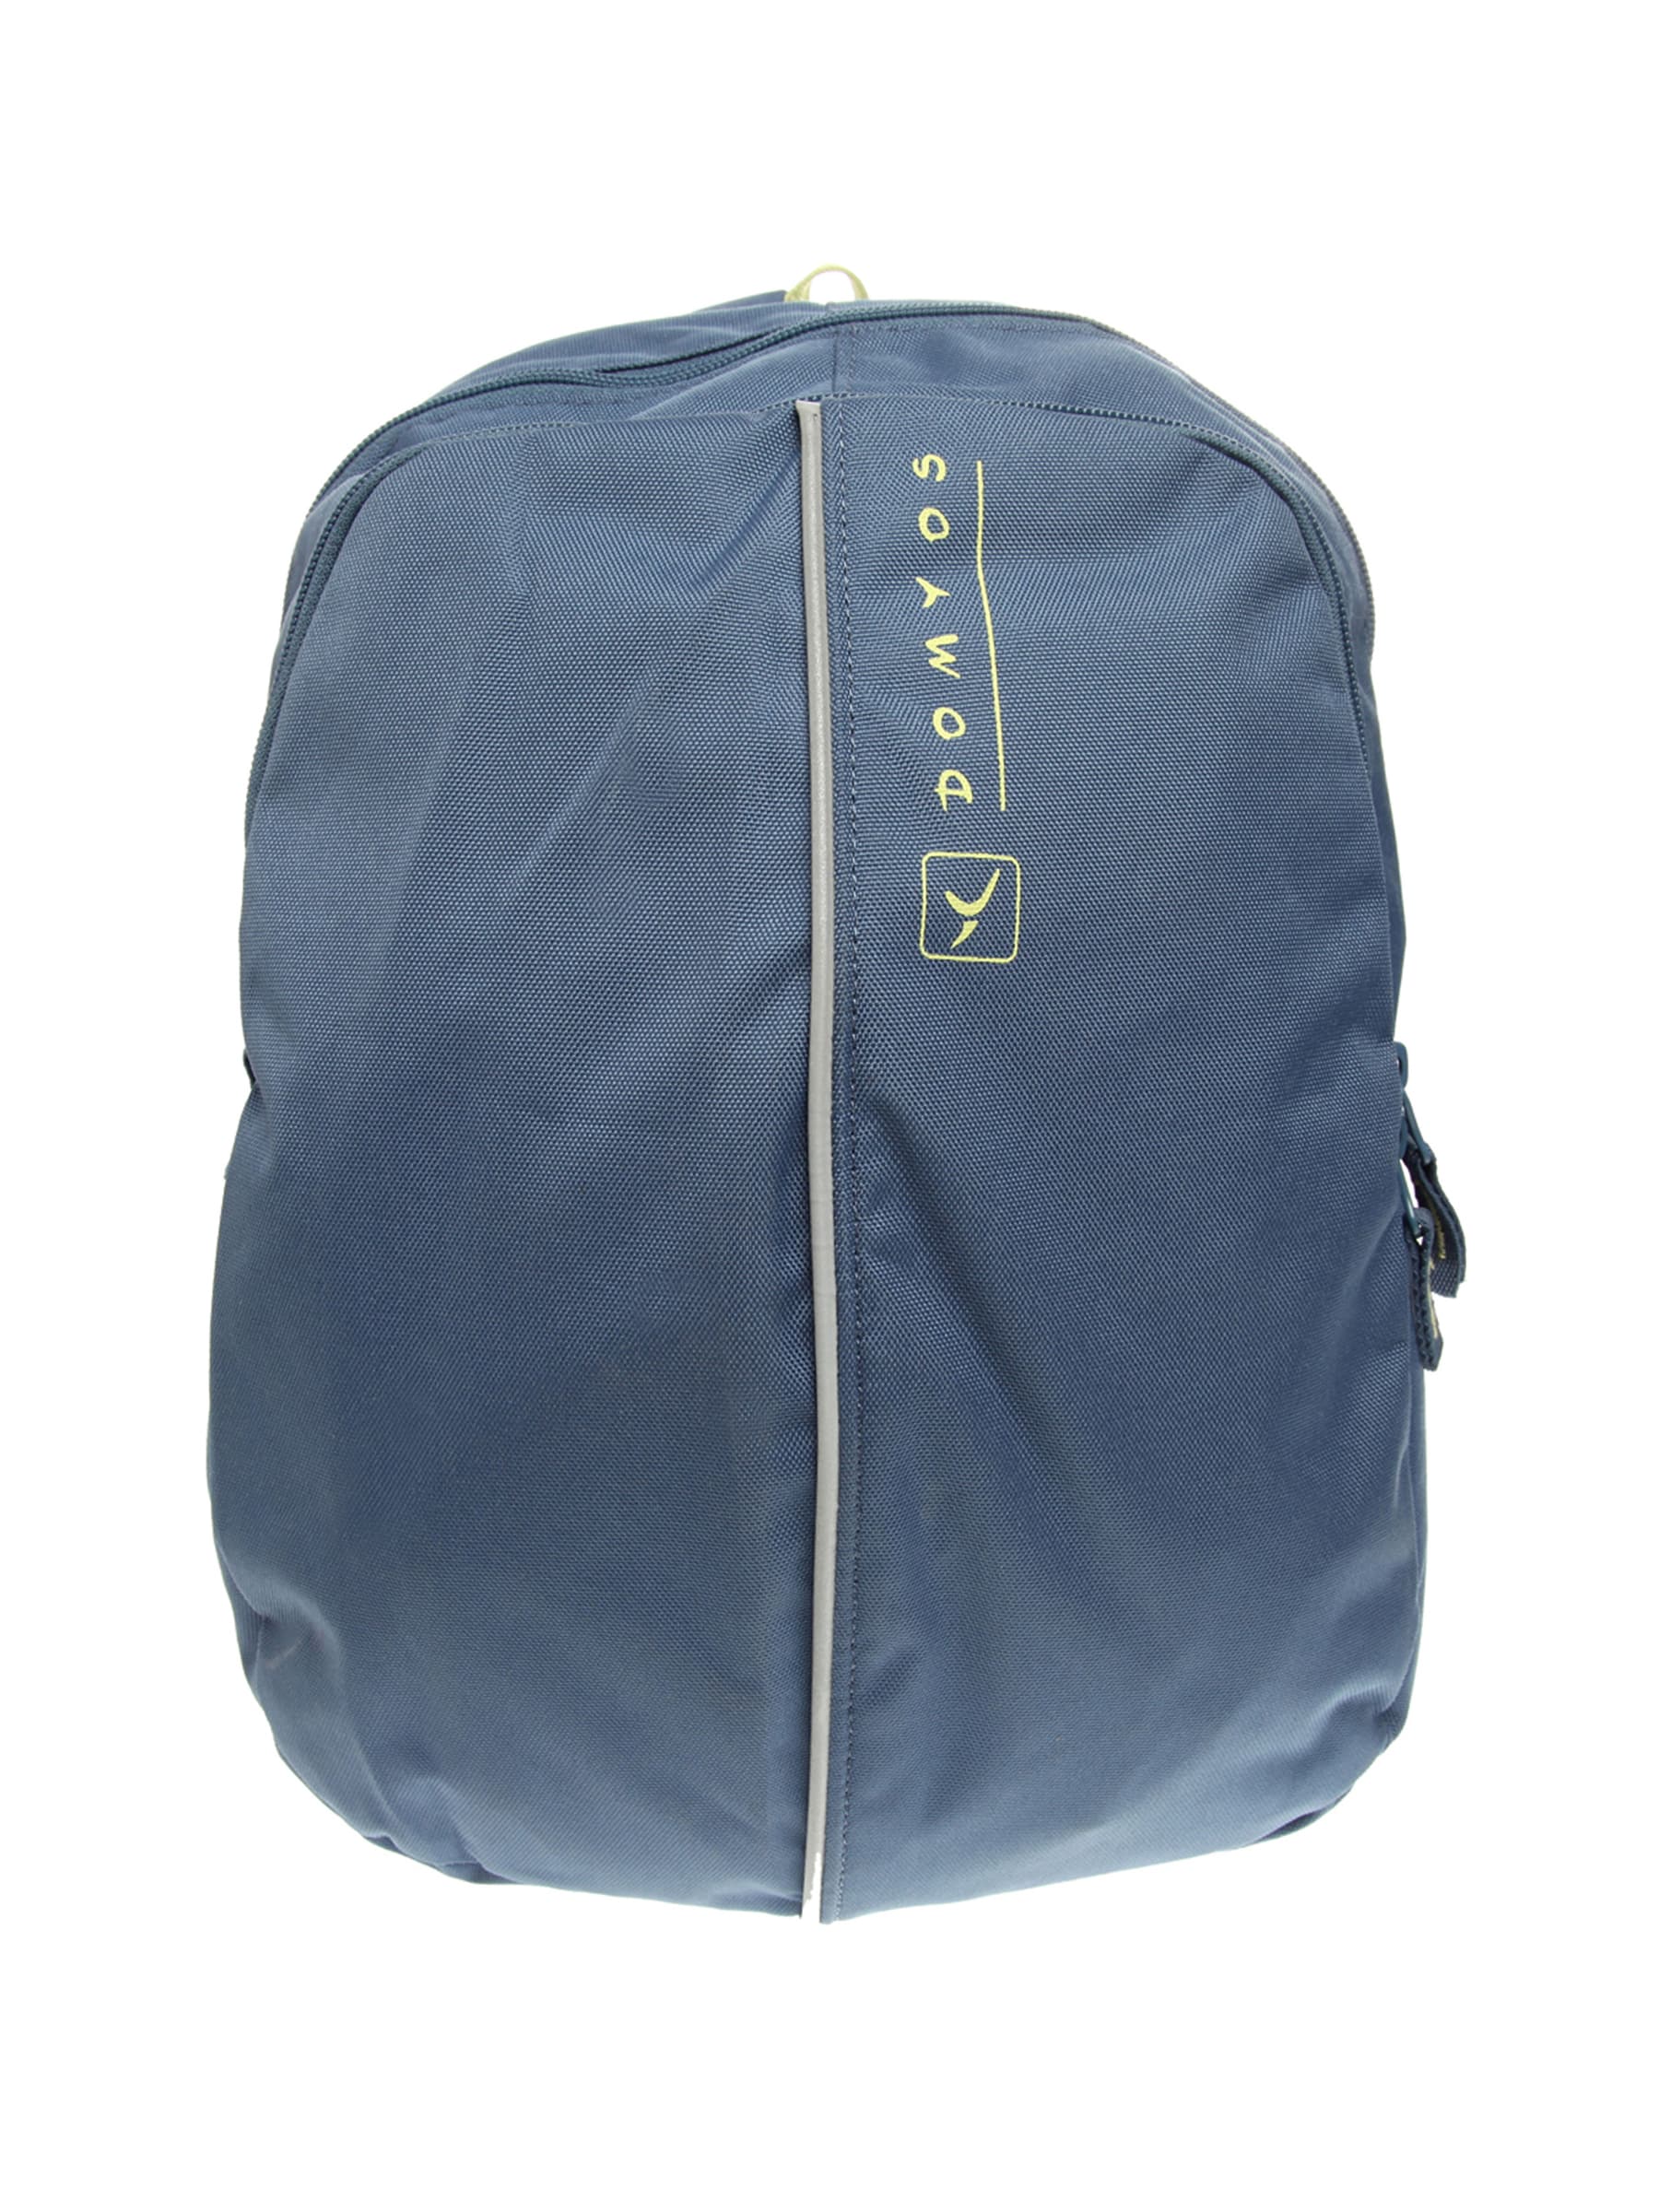 Domyos Navy Blue Bag